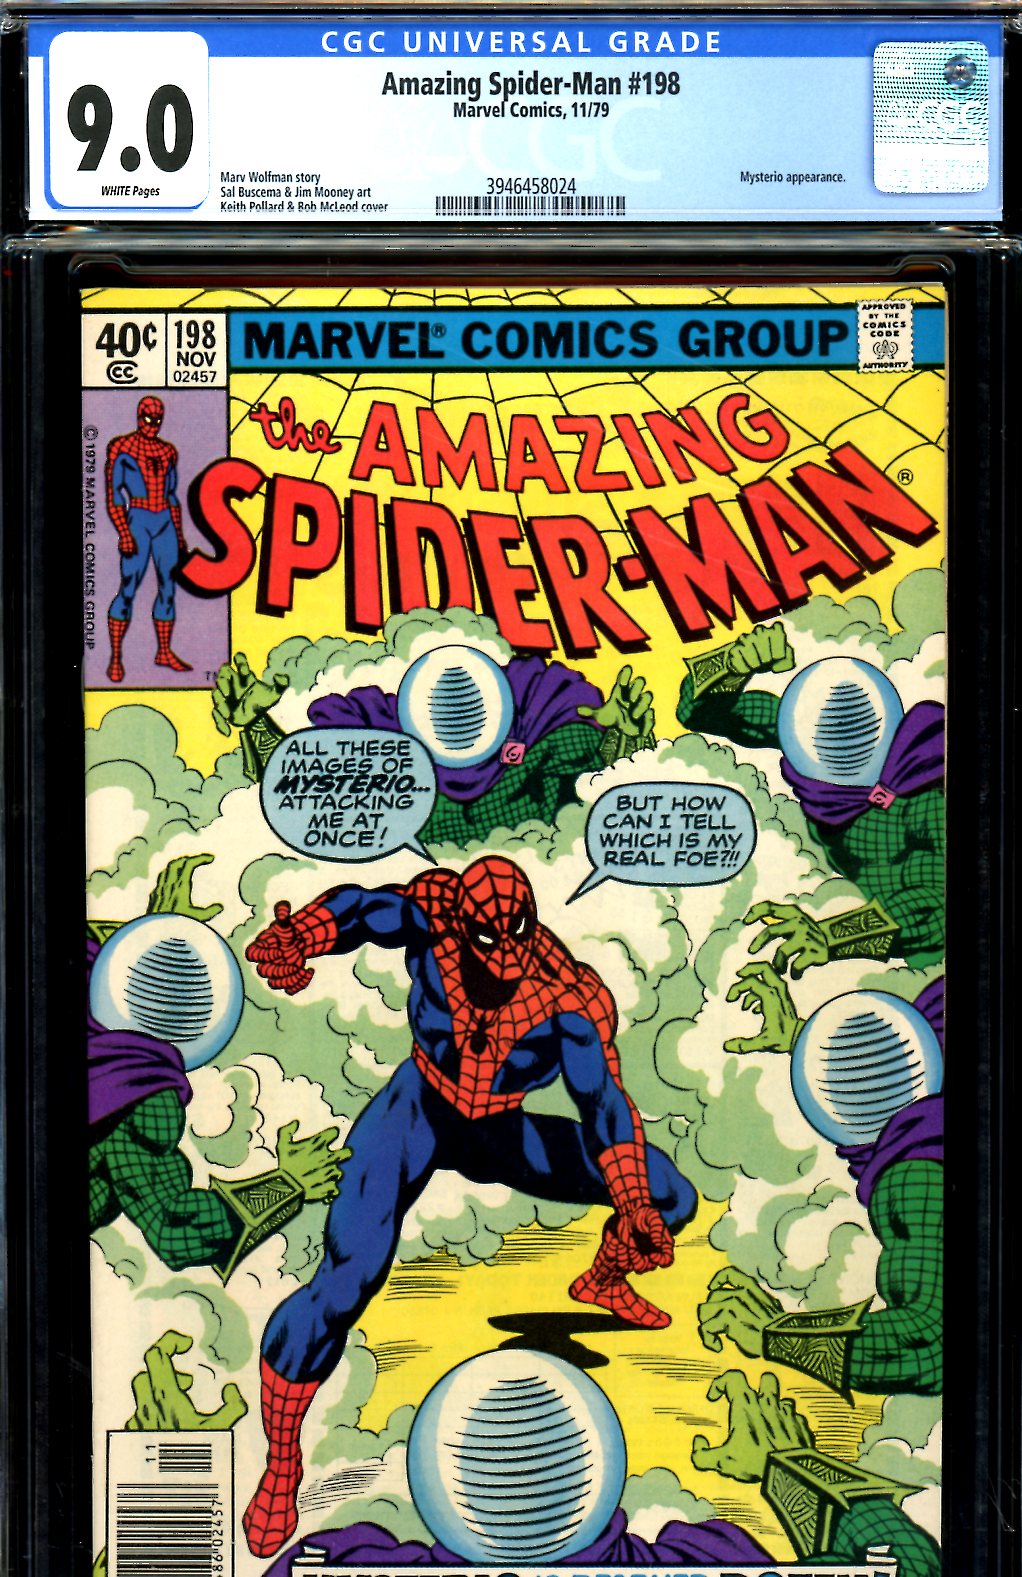 Cedar Chest Comics - Amazing Spider-Man #198 CGC graded 9.0 